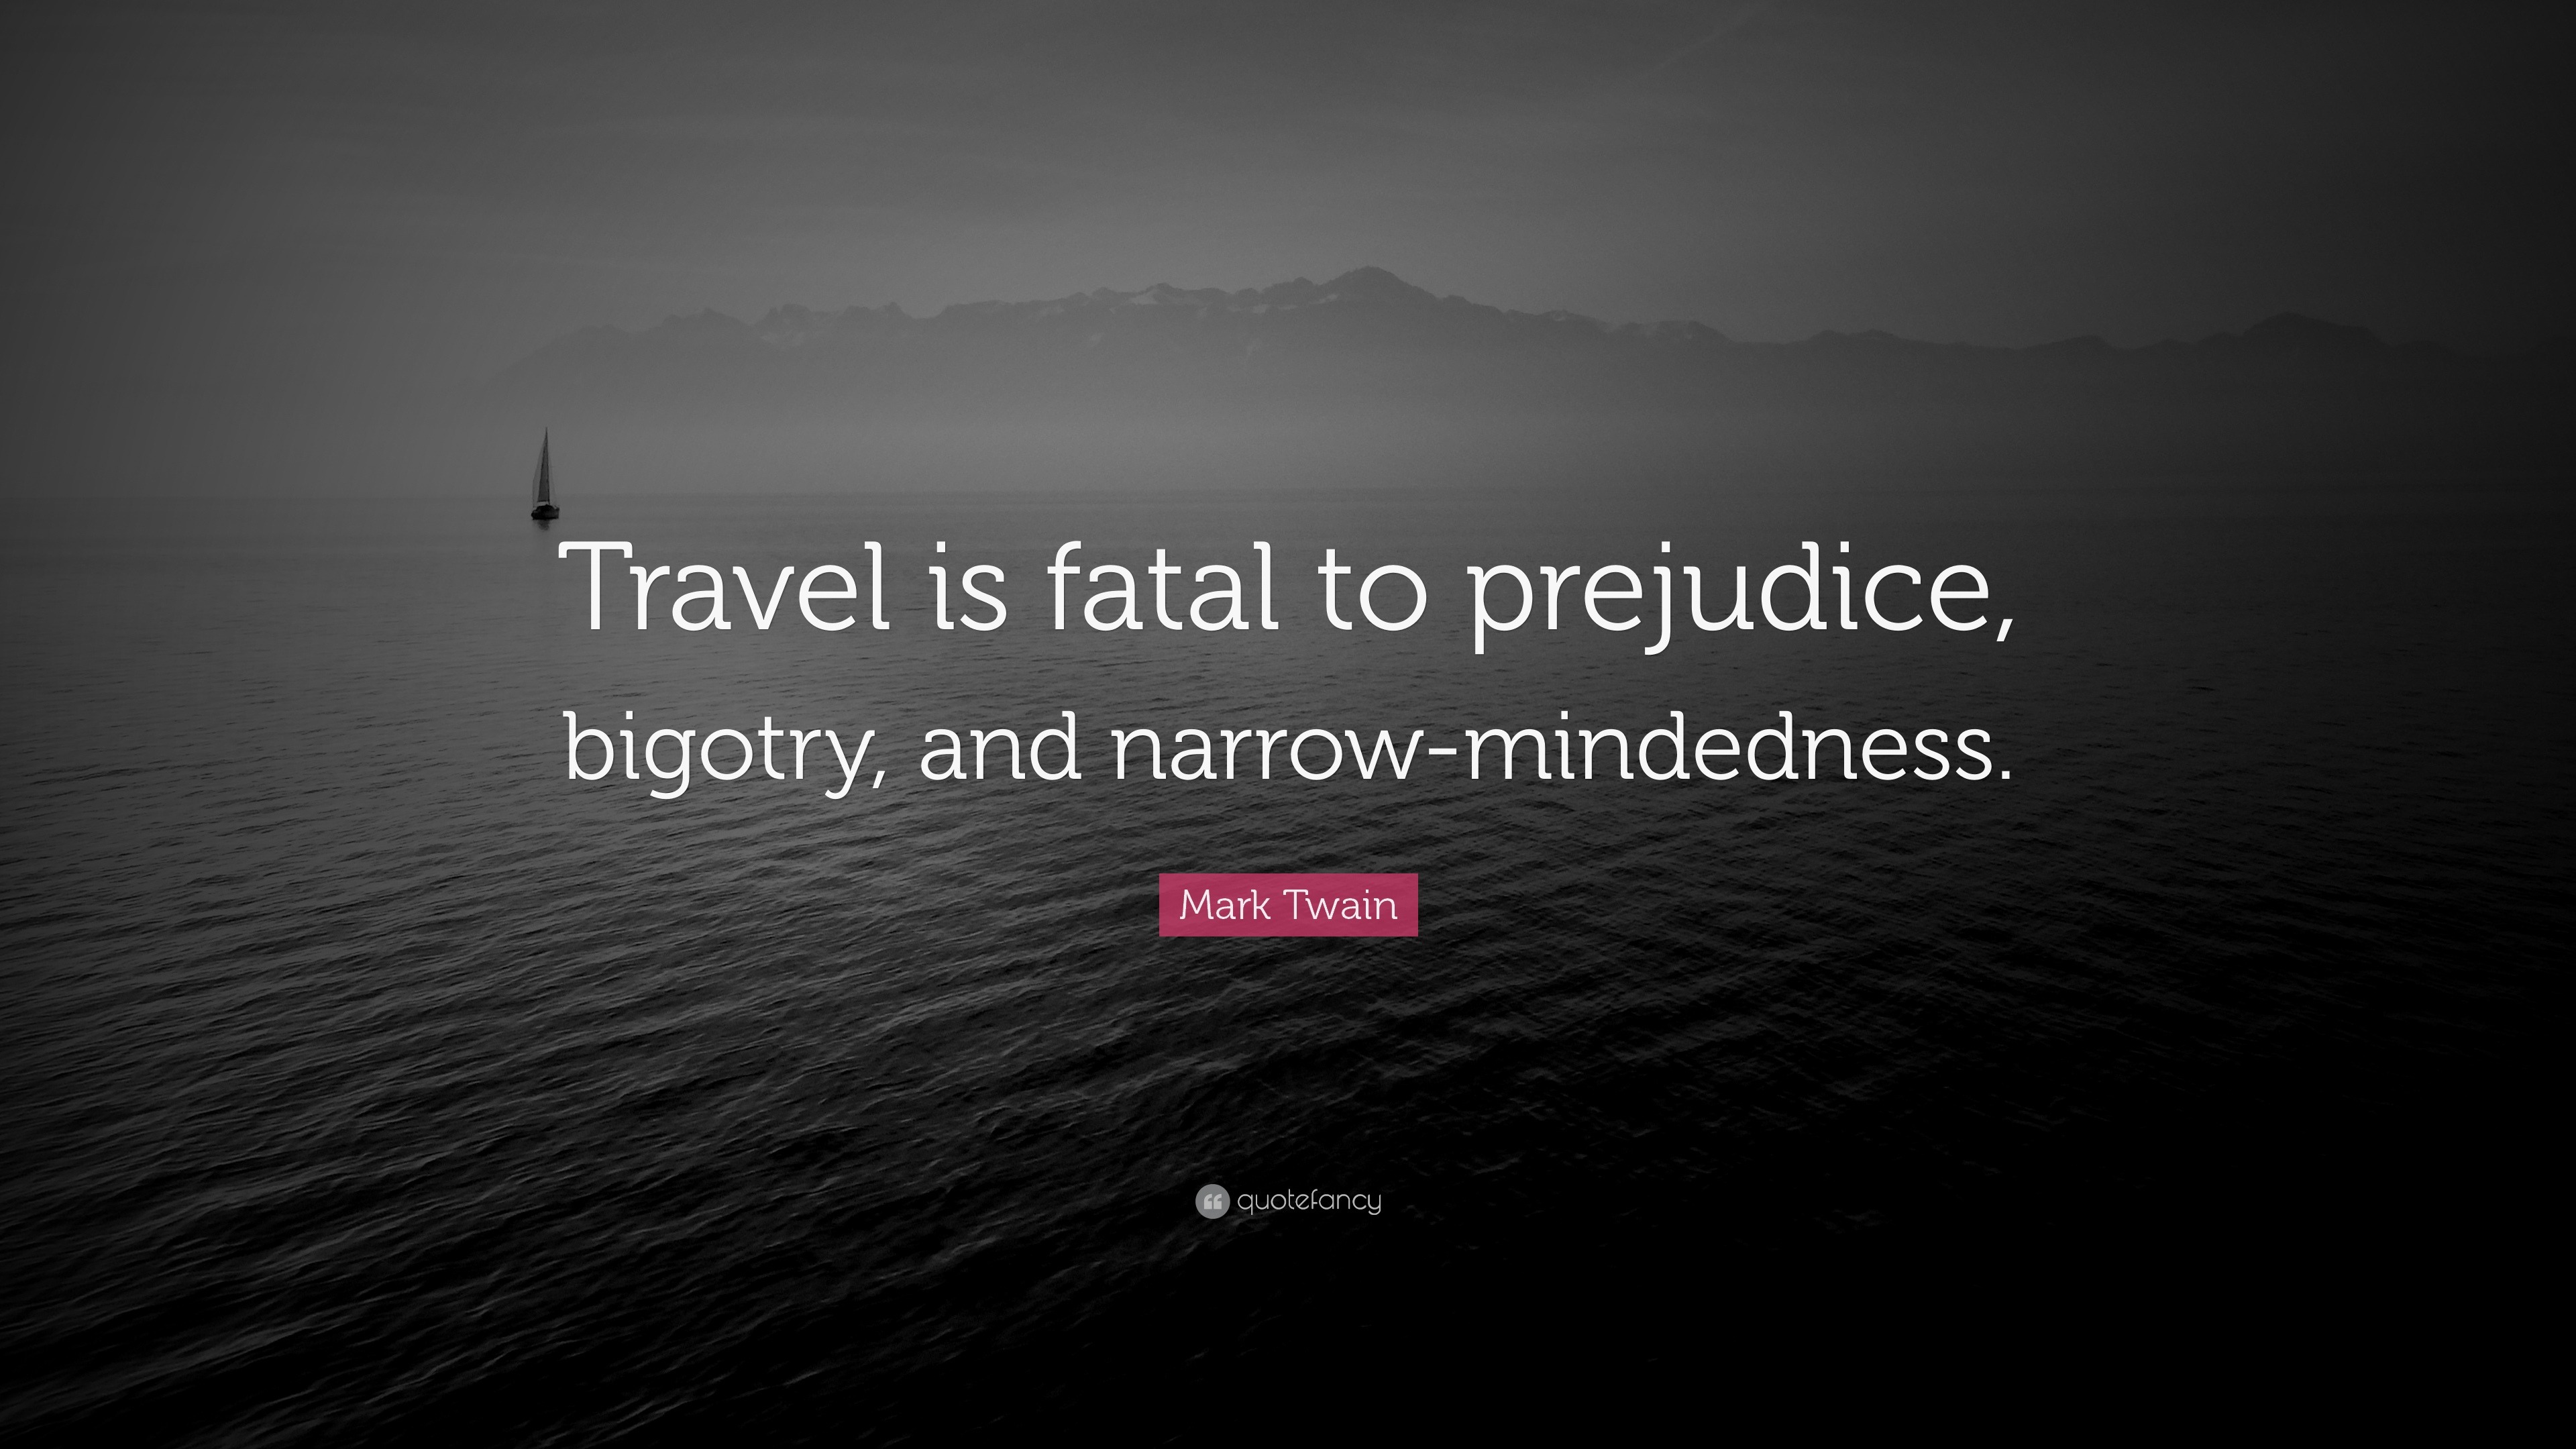 Mark Twain Quote: “Travel is fatal to prejudice, bigotry ...